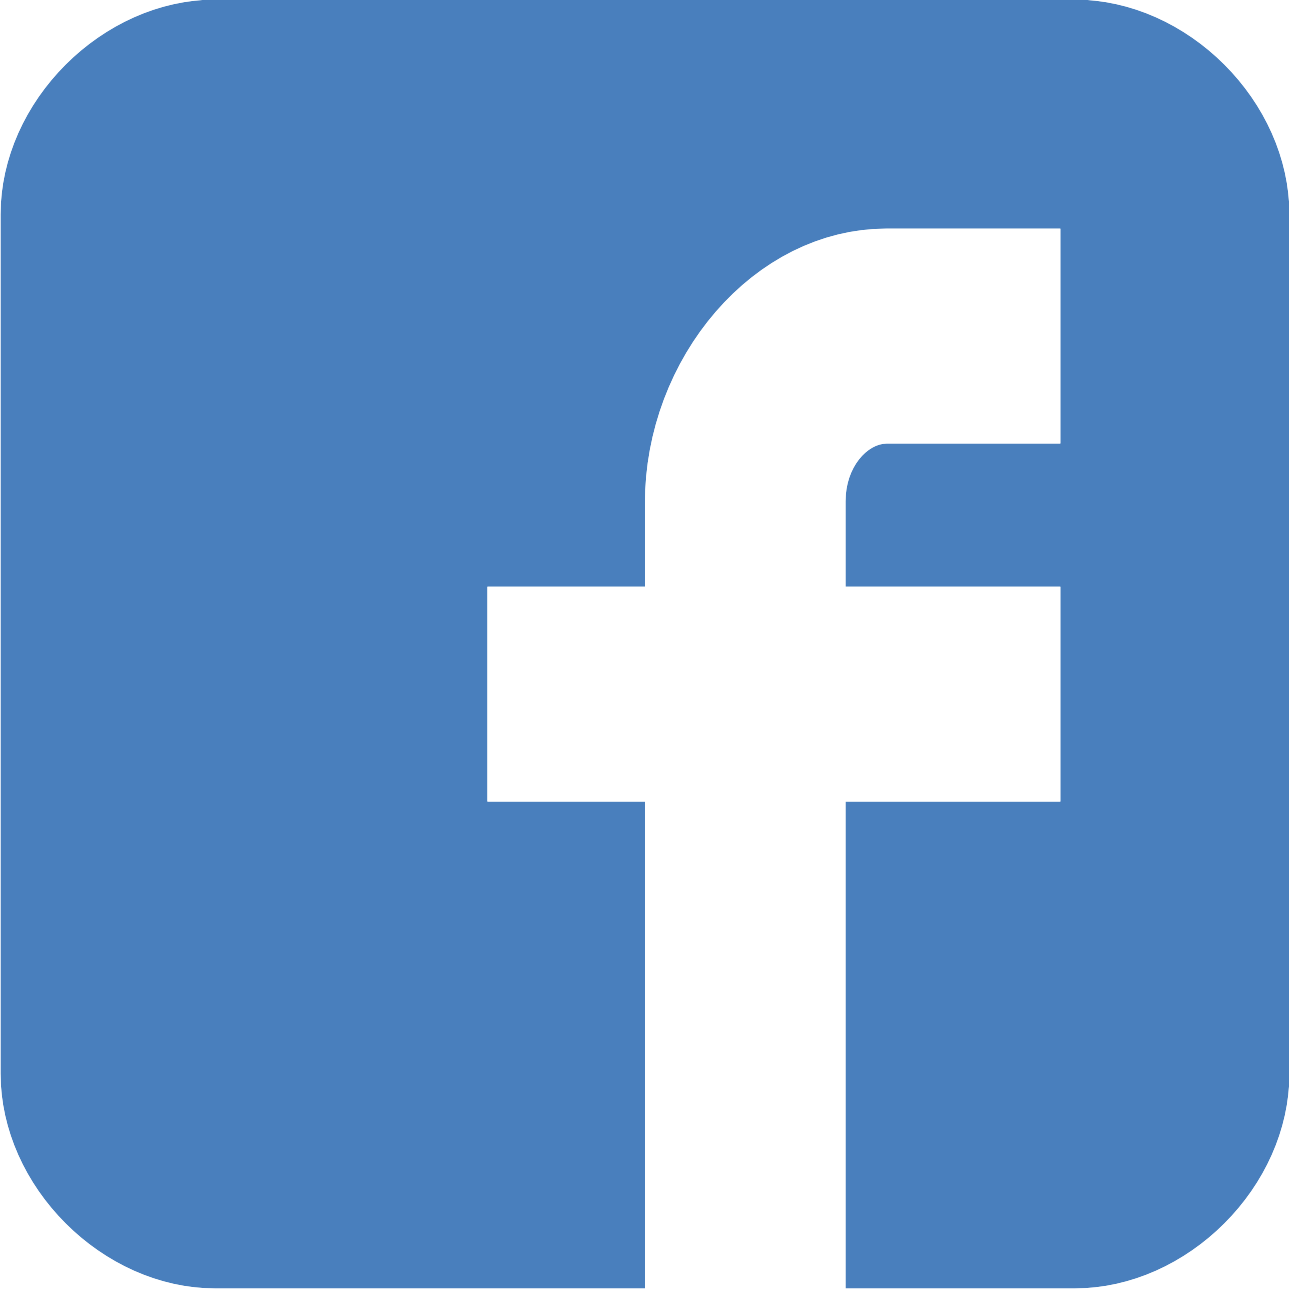 Icons Media Computer Facebook Social Logo PNG Image